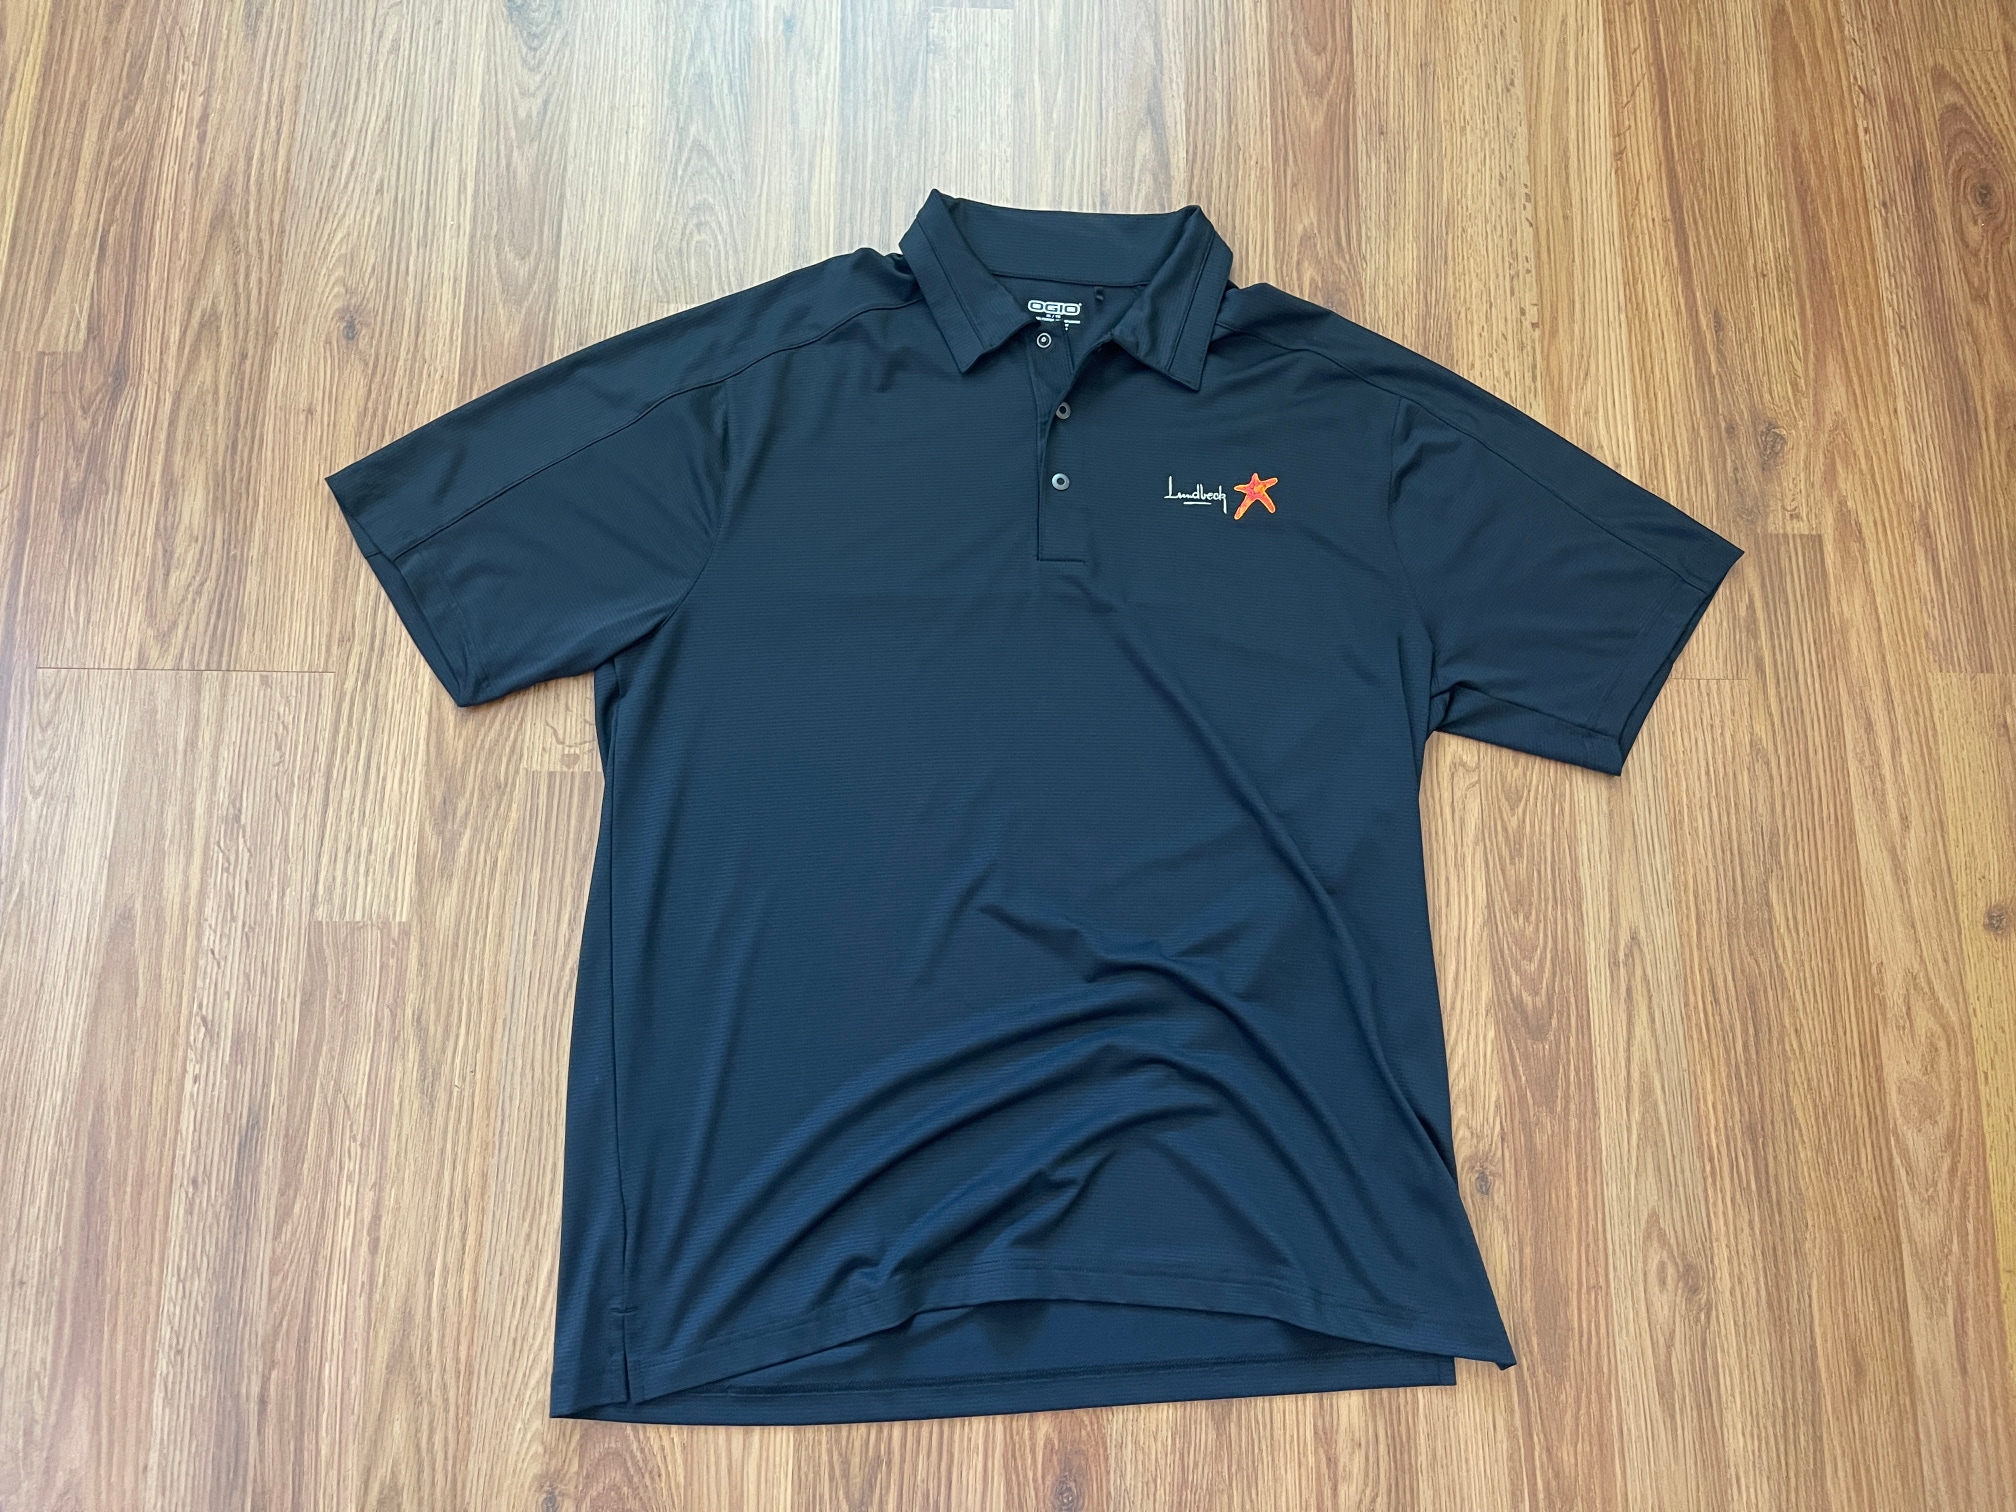 Lundbeck Pharmaceuticals SUPER AWESOME OGIO Black Size XL Polo Golf Shirt!